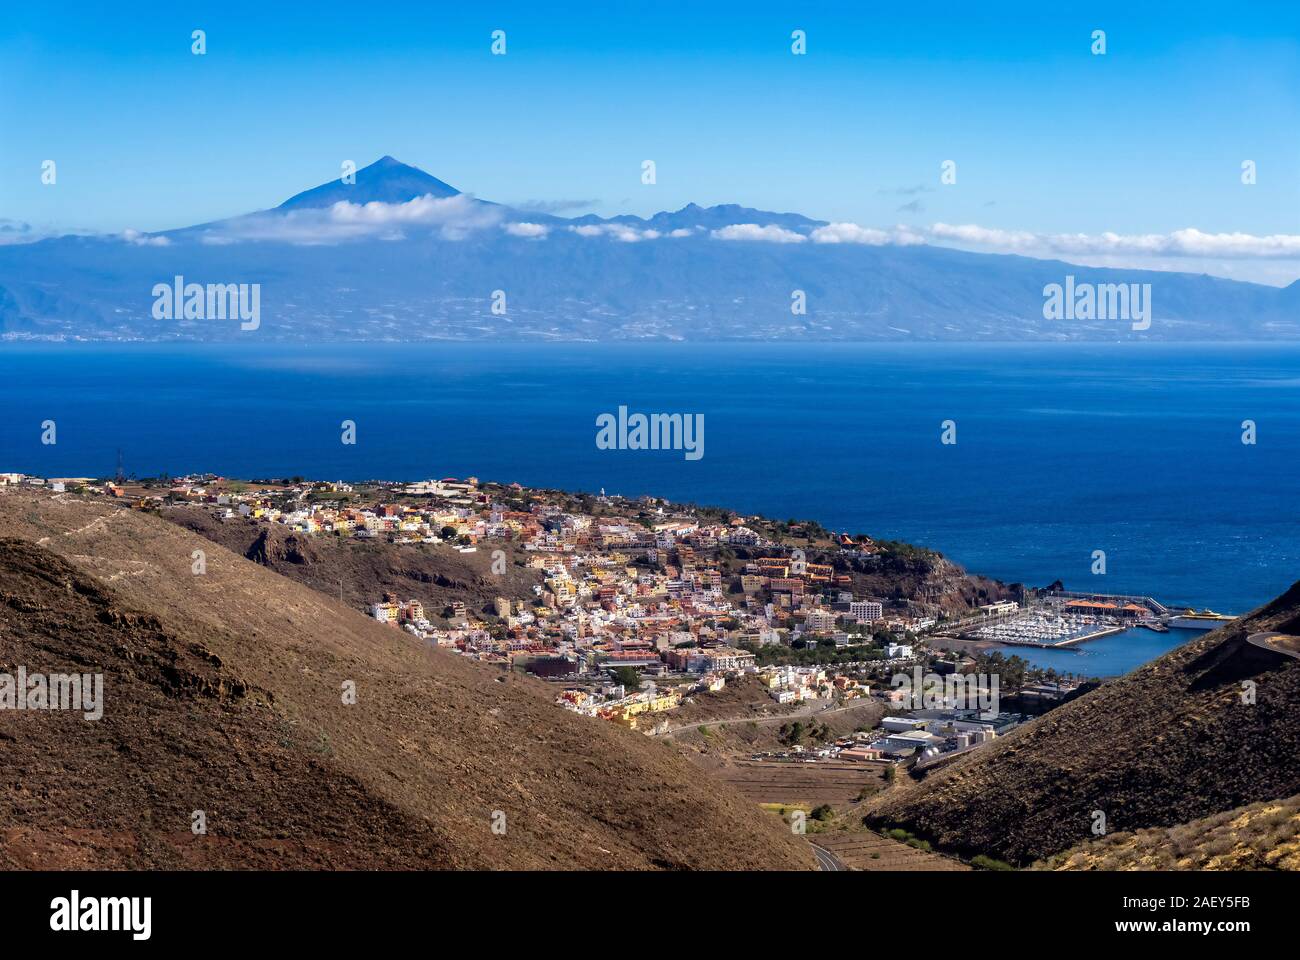 San Sebastián on La Gomera with Tenerife and Teide in the background Stock Photo